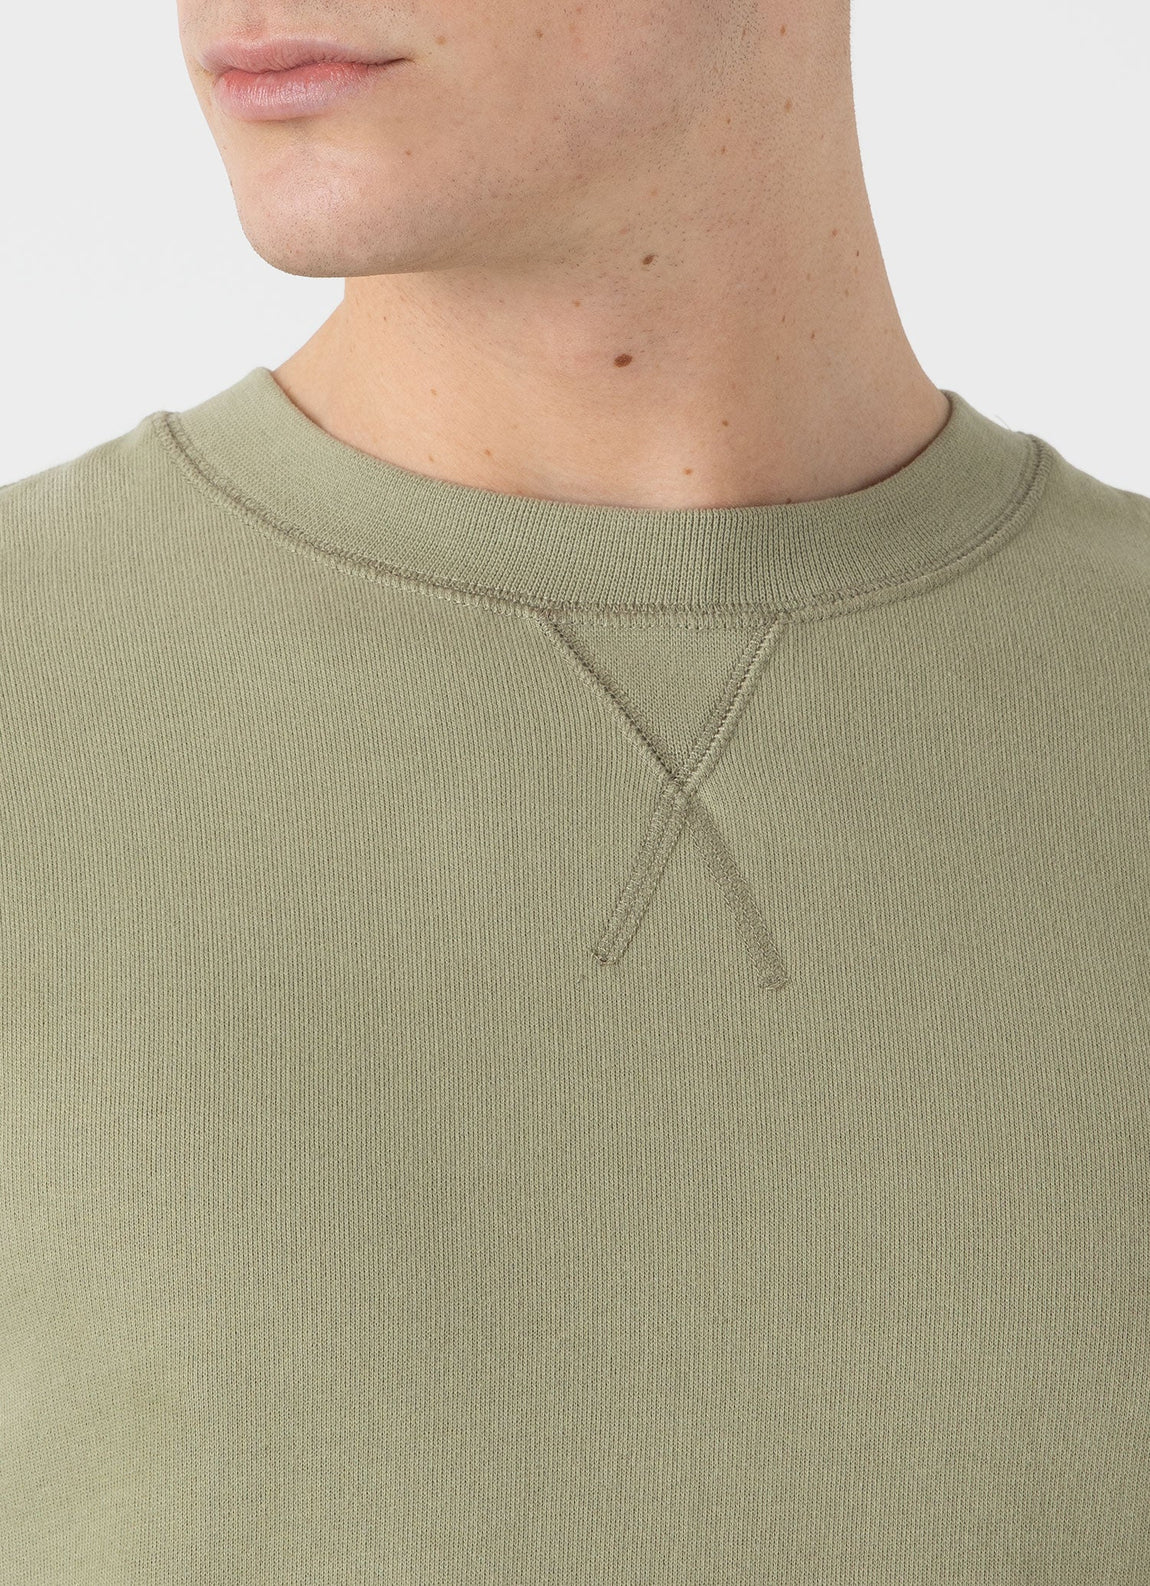 Men's Loopback Sweatshirt in Pale Khaki